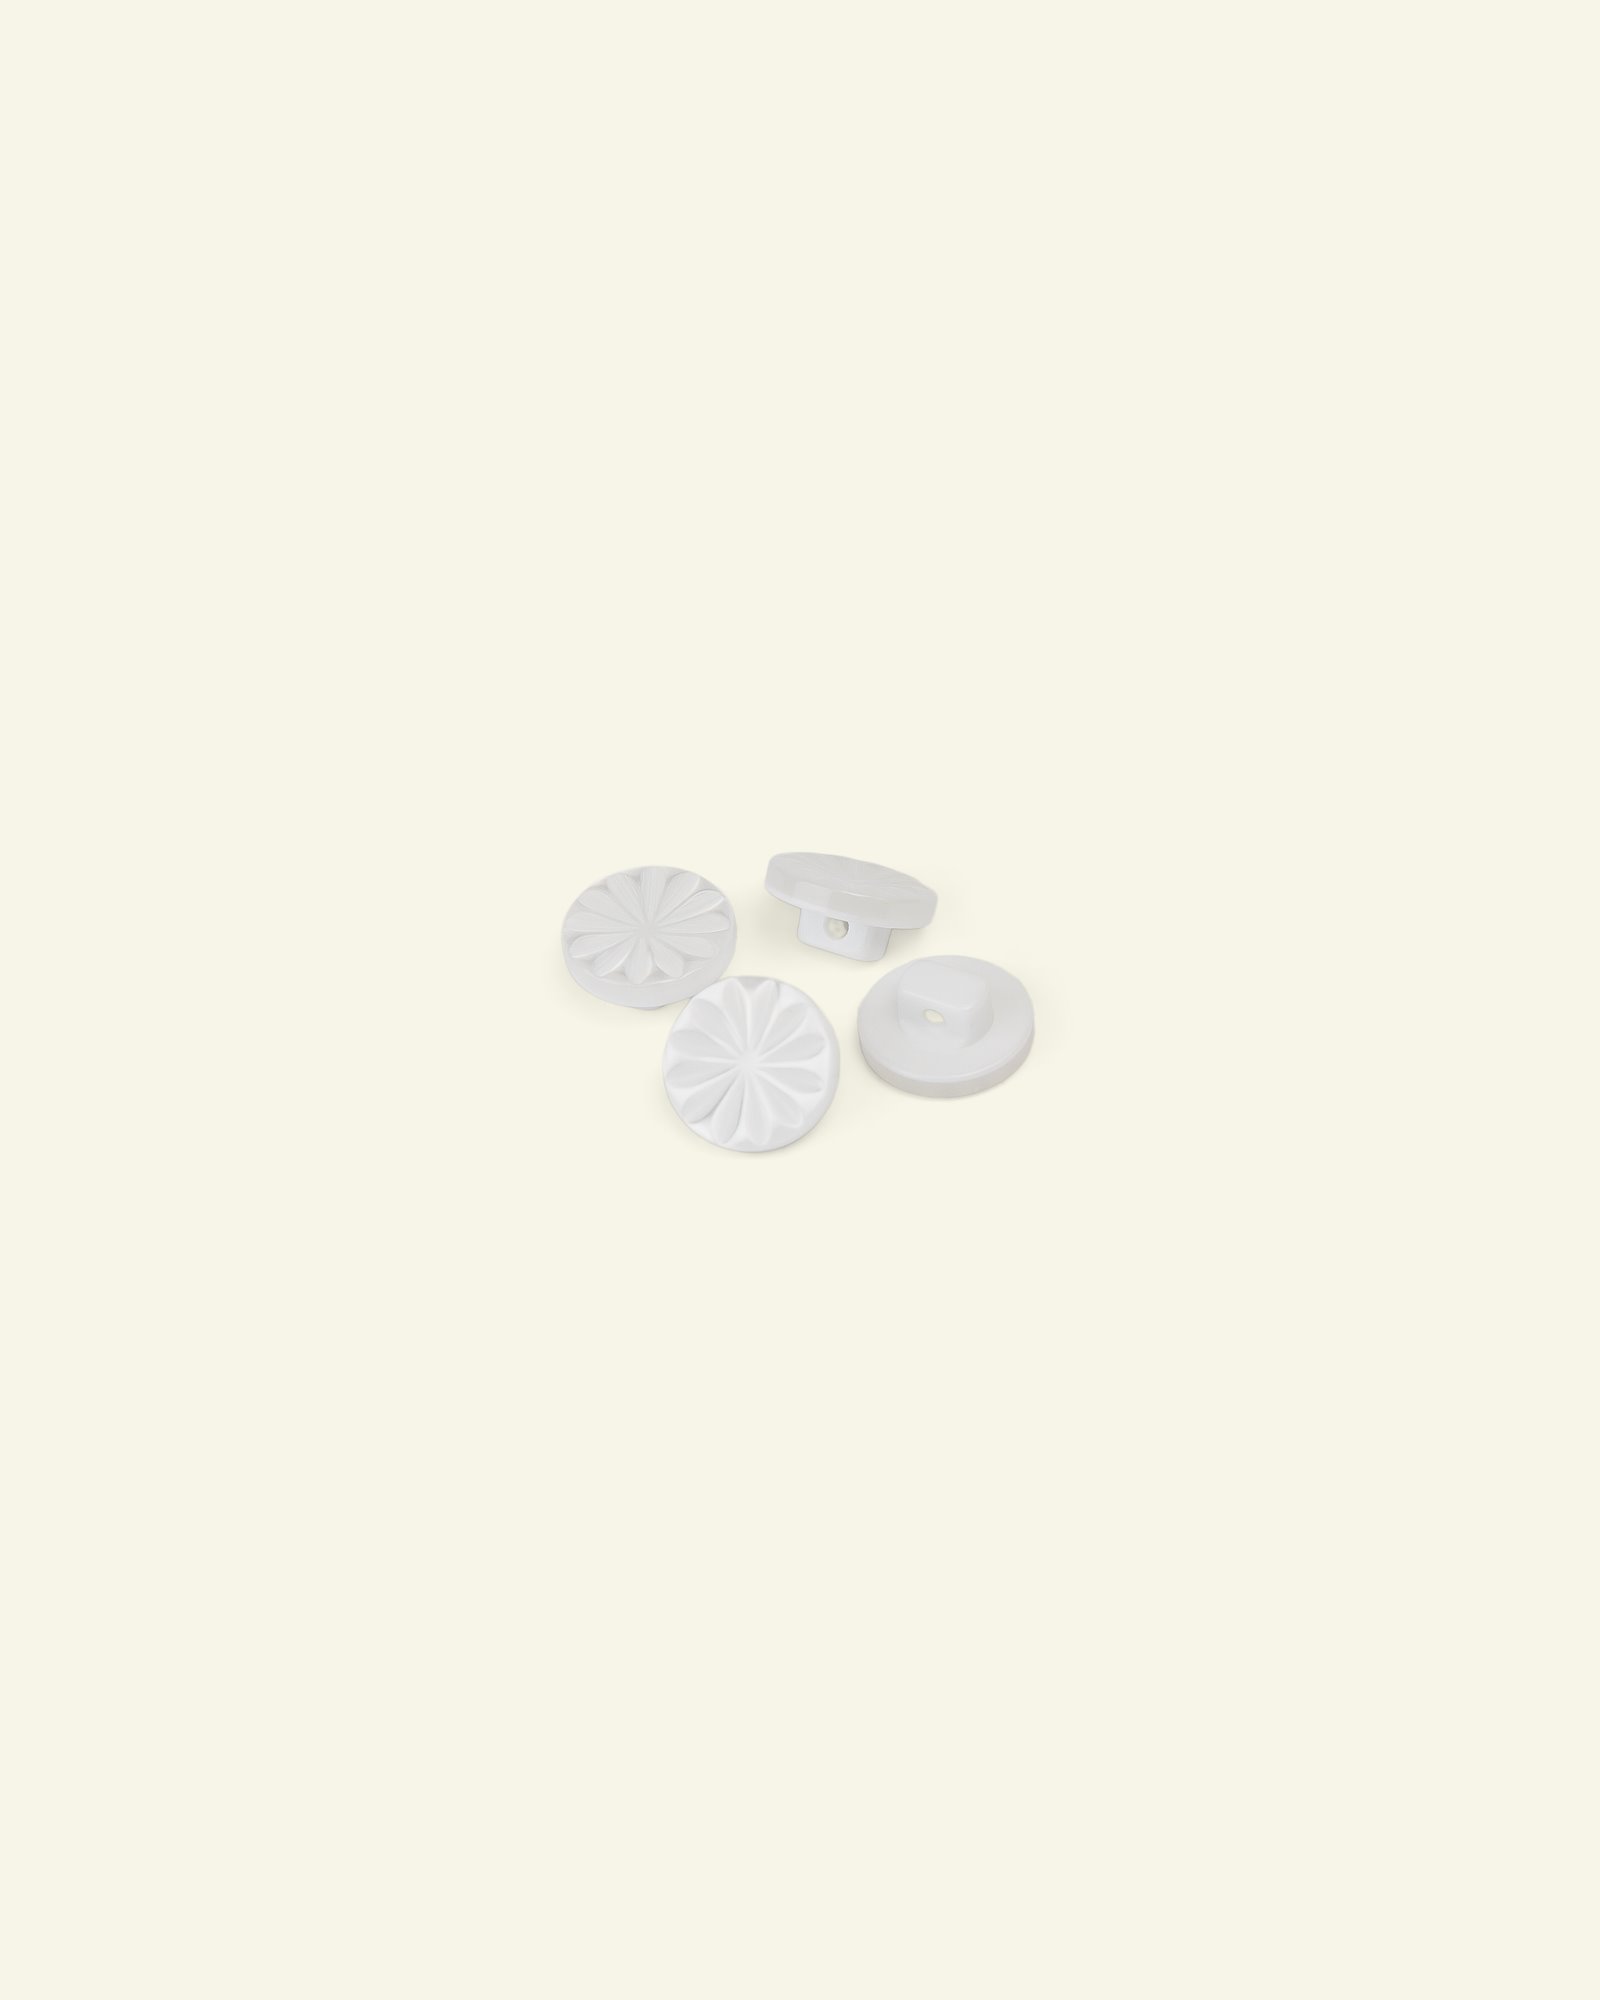 Shank button flower 12mm white 4pcs 33023_pack